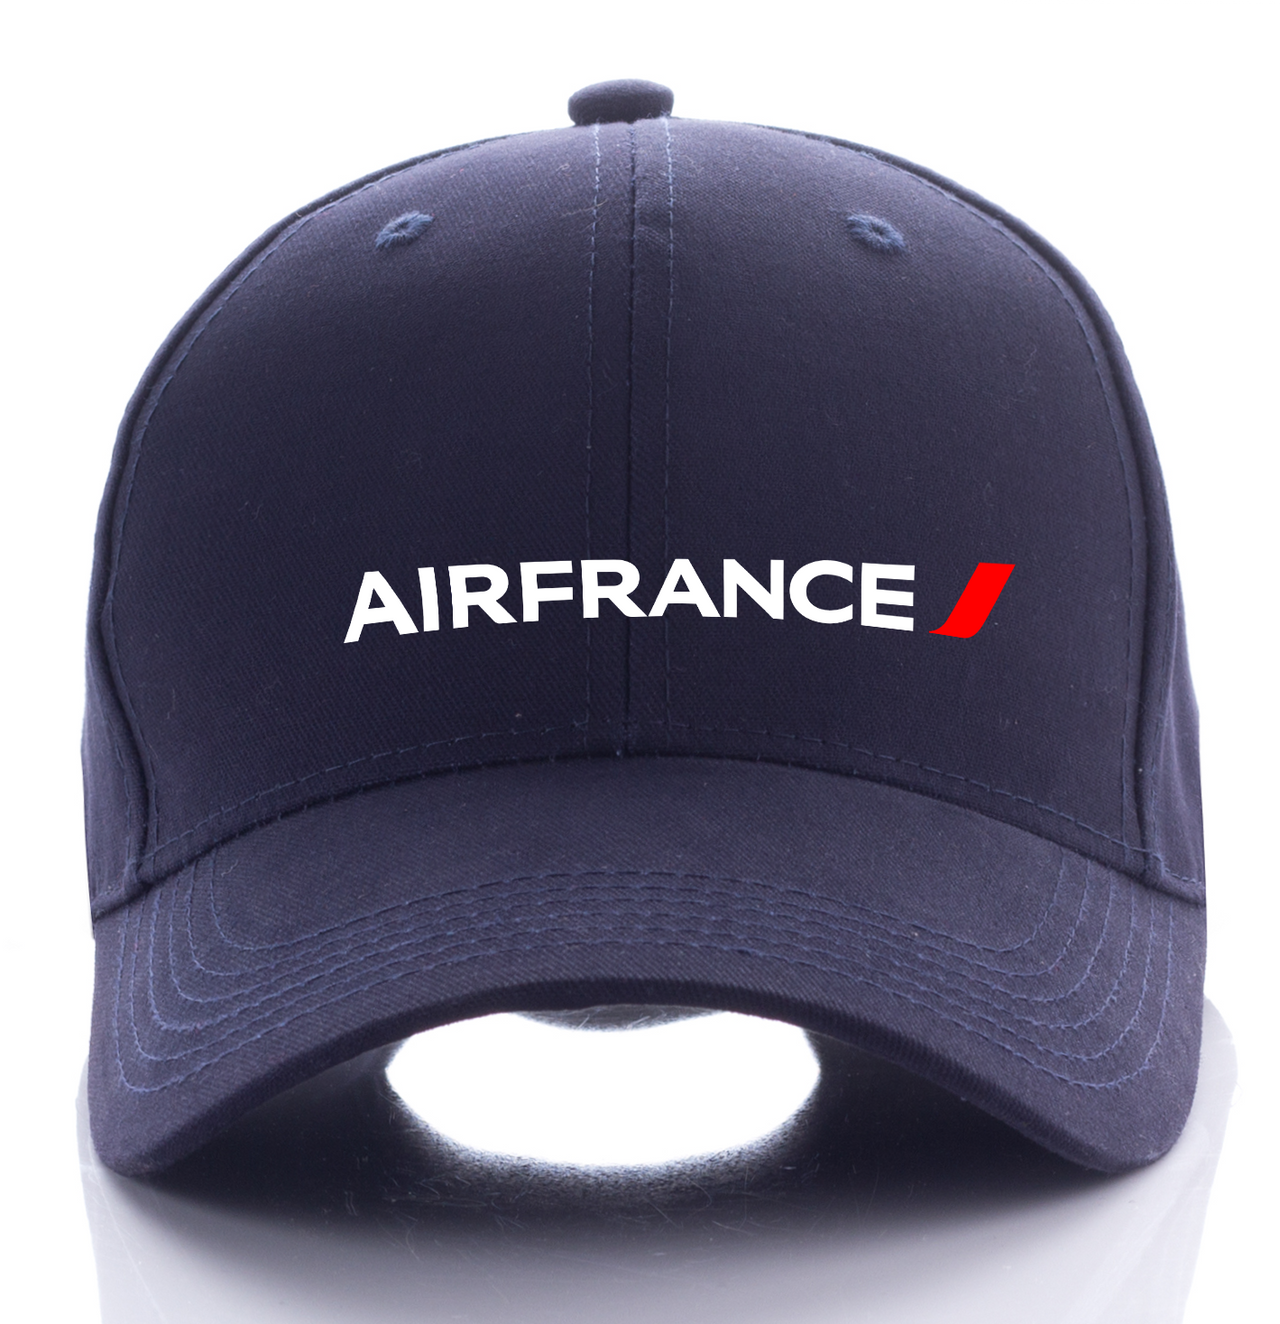 FRANCE AIRLINE DESIGNED CAP